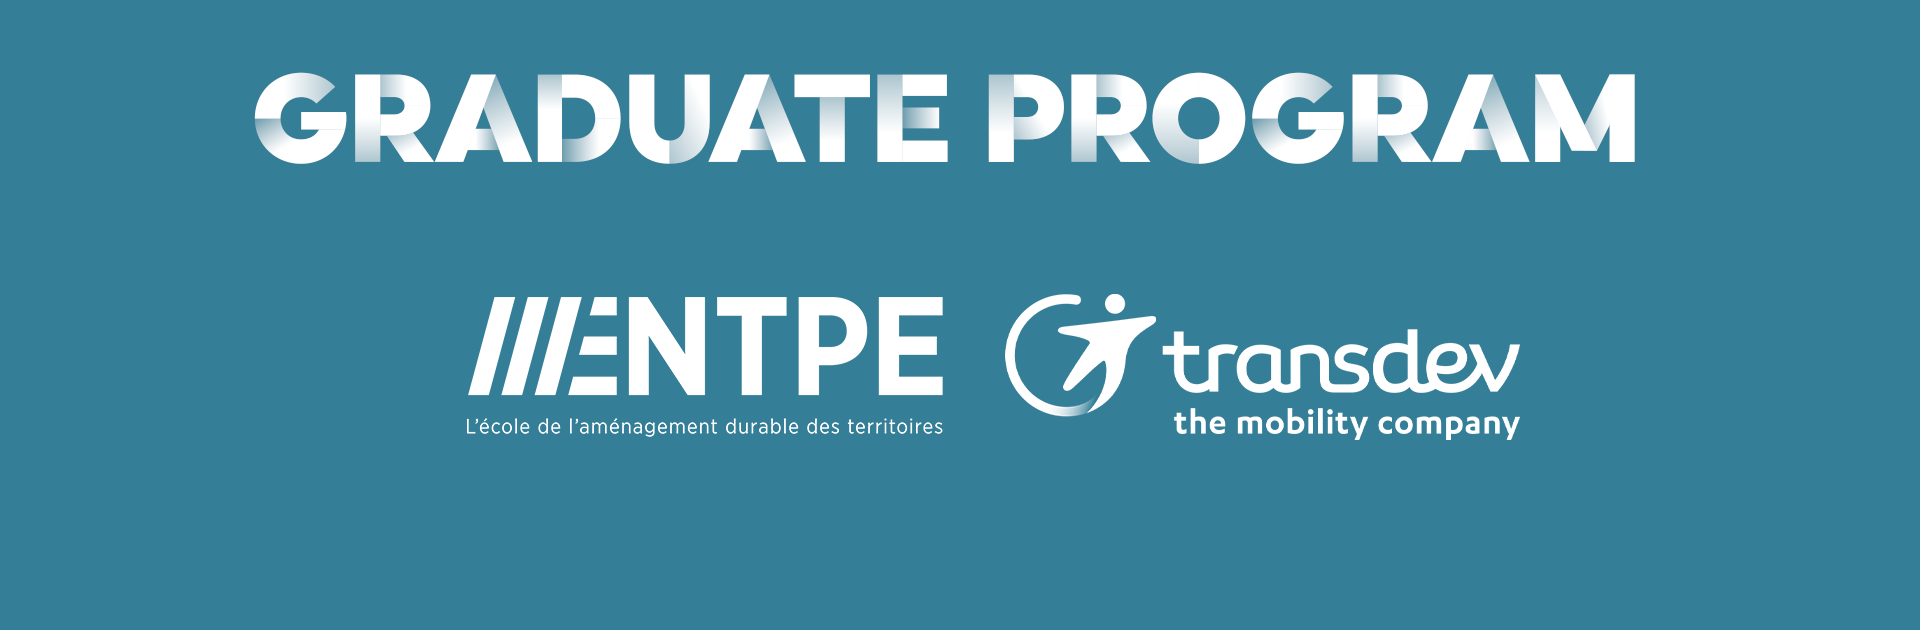 Graduate program ENTPE Transdev